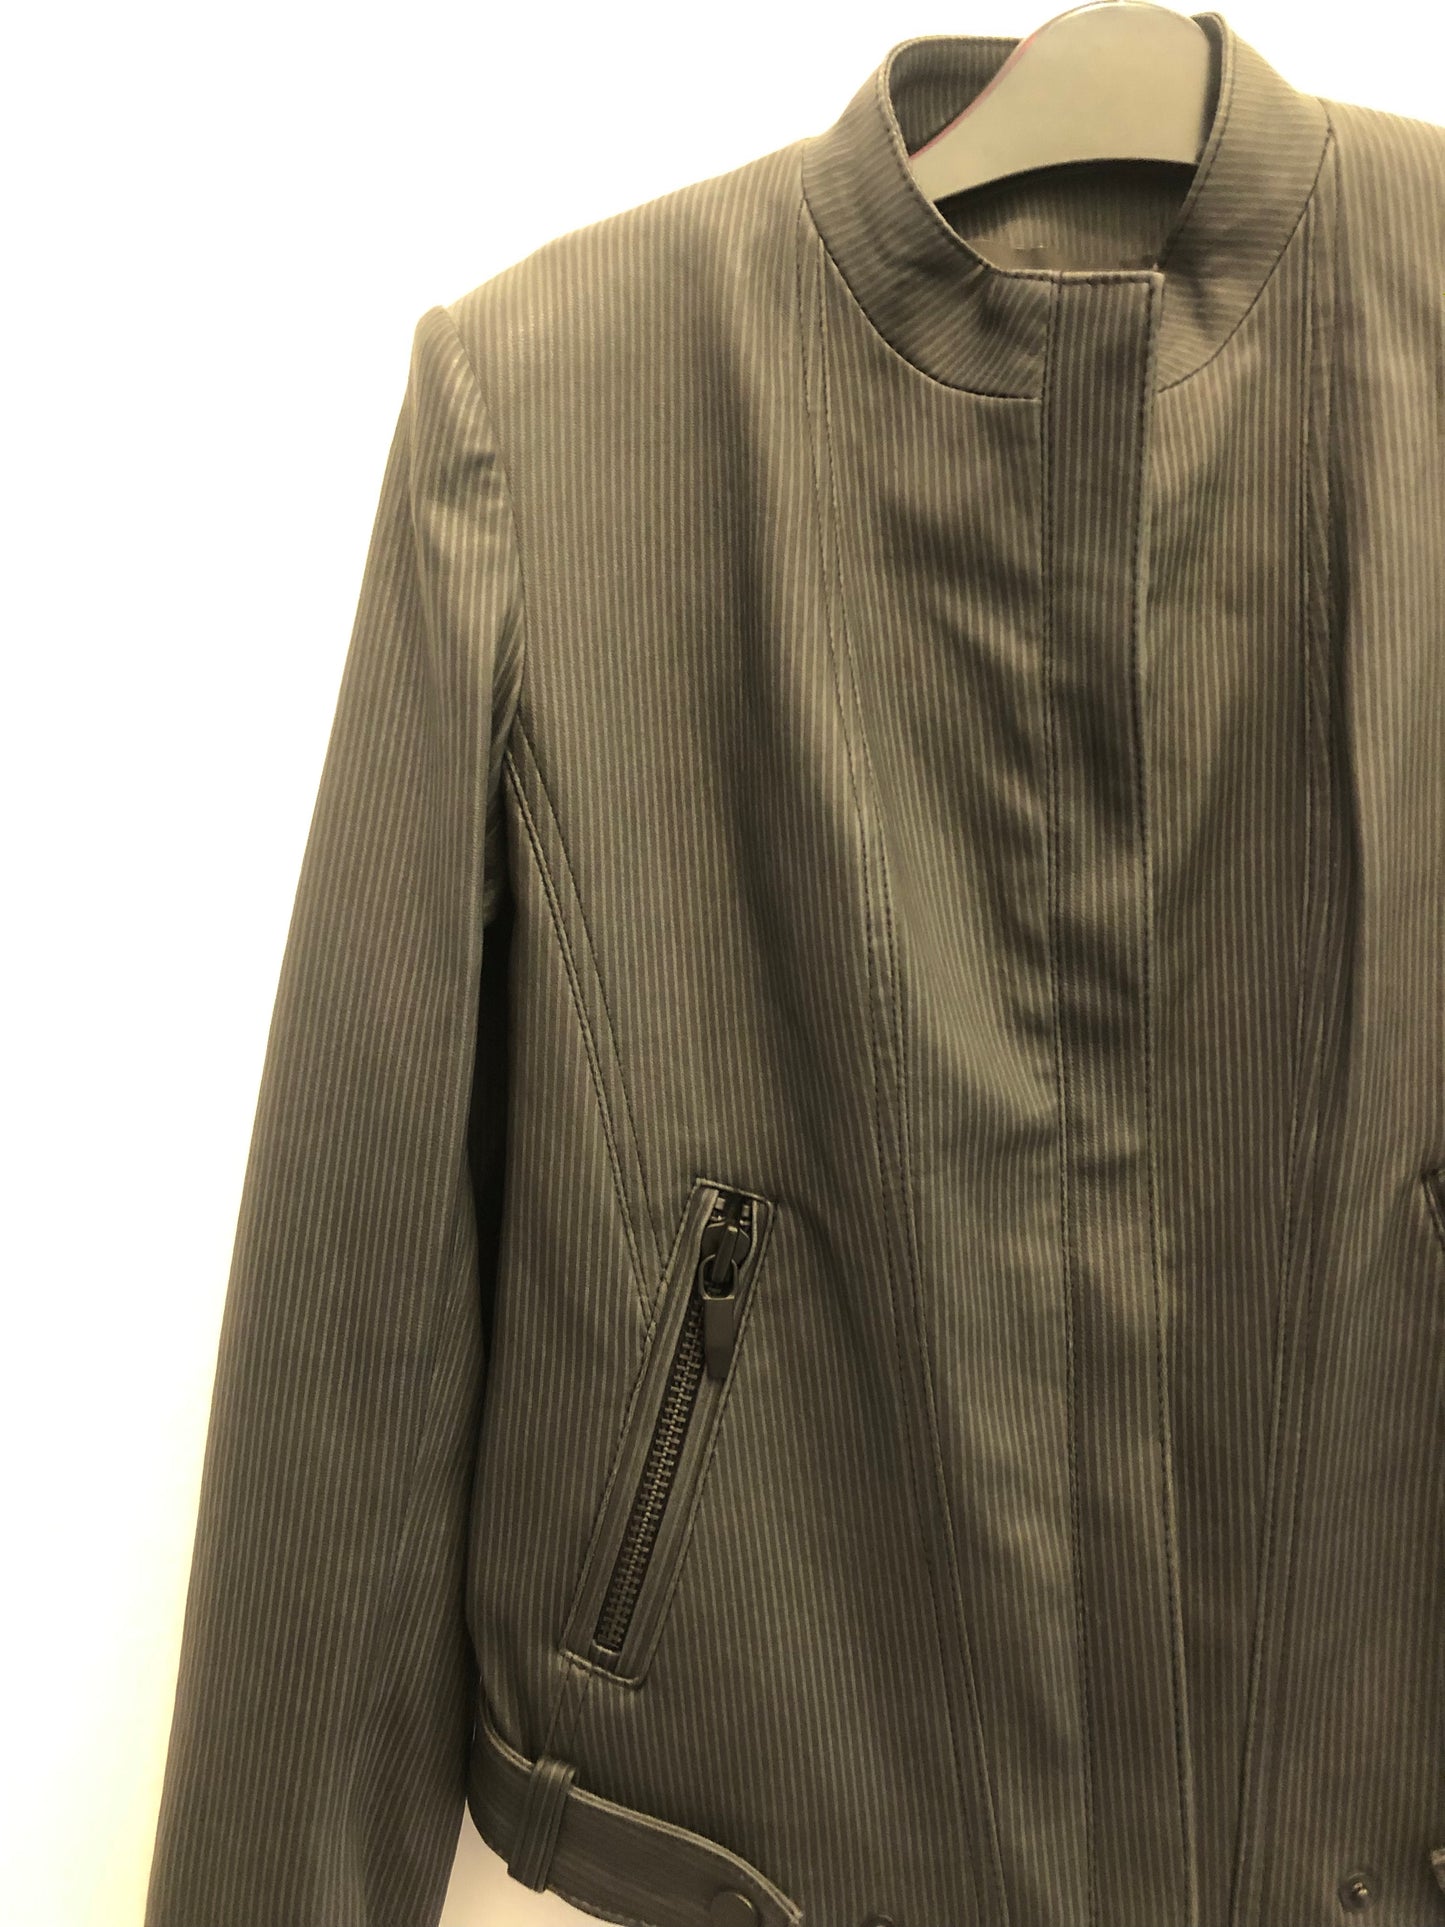 Theyskens’ Theory Black Stripe Lamb Leather Jacket